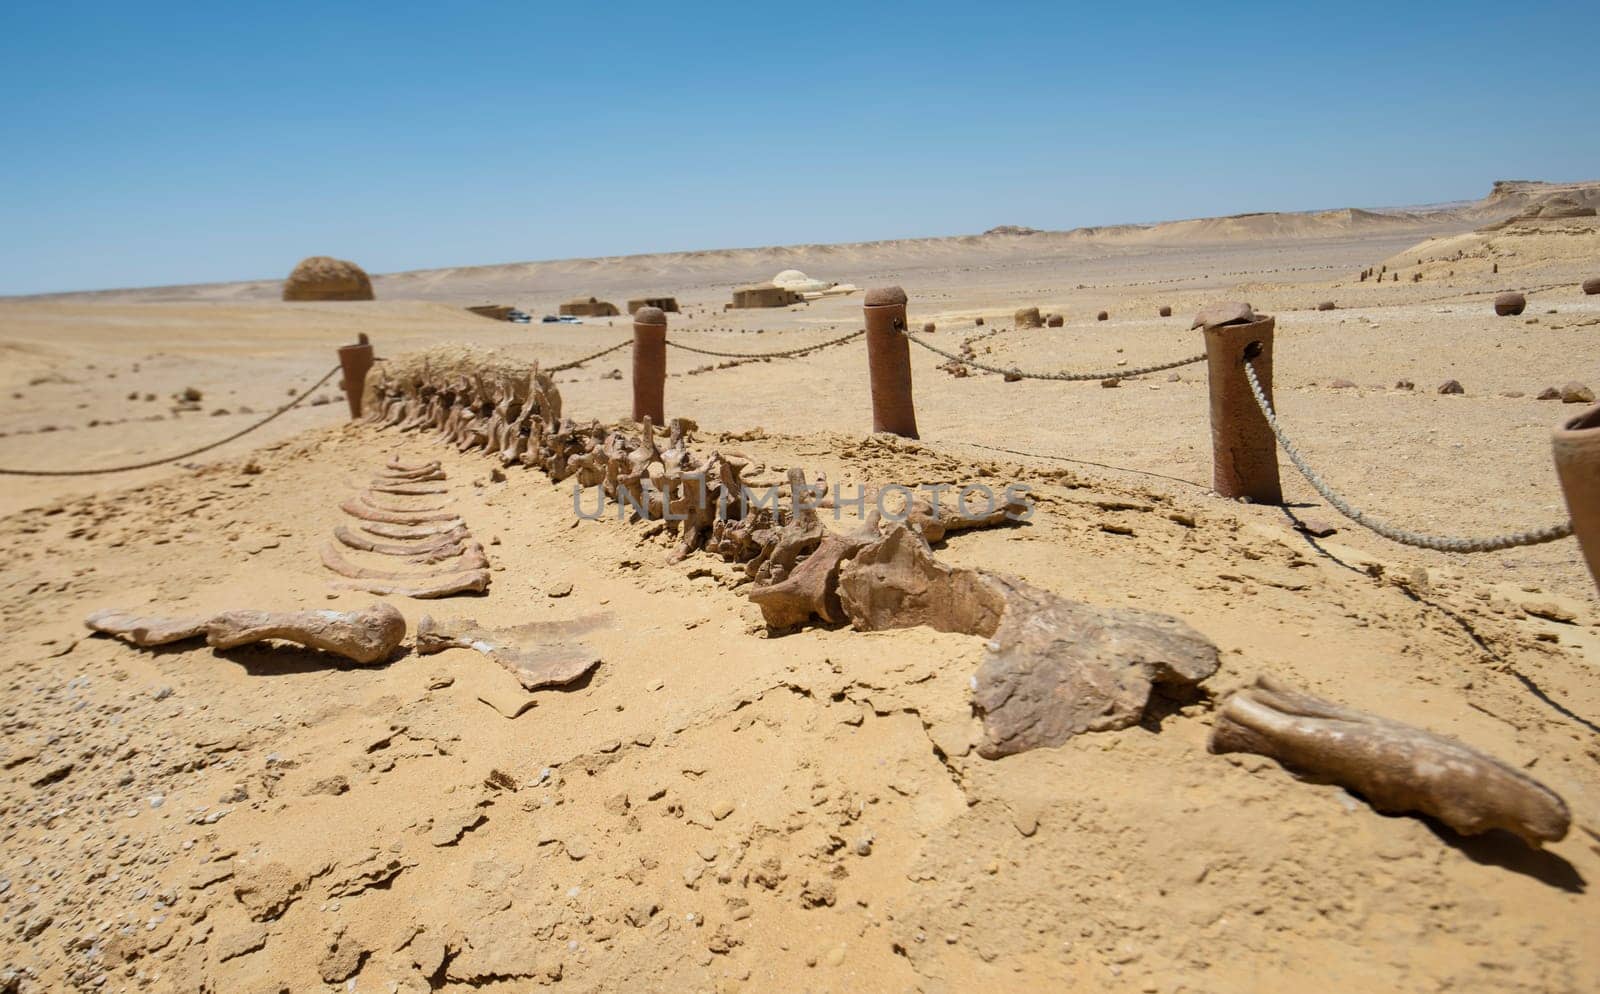 Barren desert landscape in hot climate with fossil skeleton by paulvinten